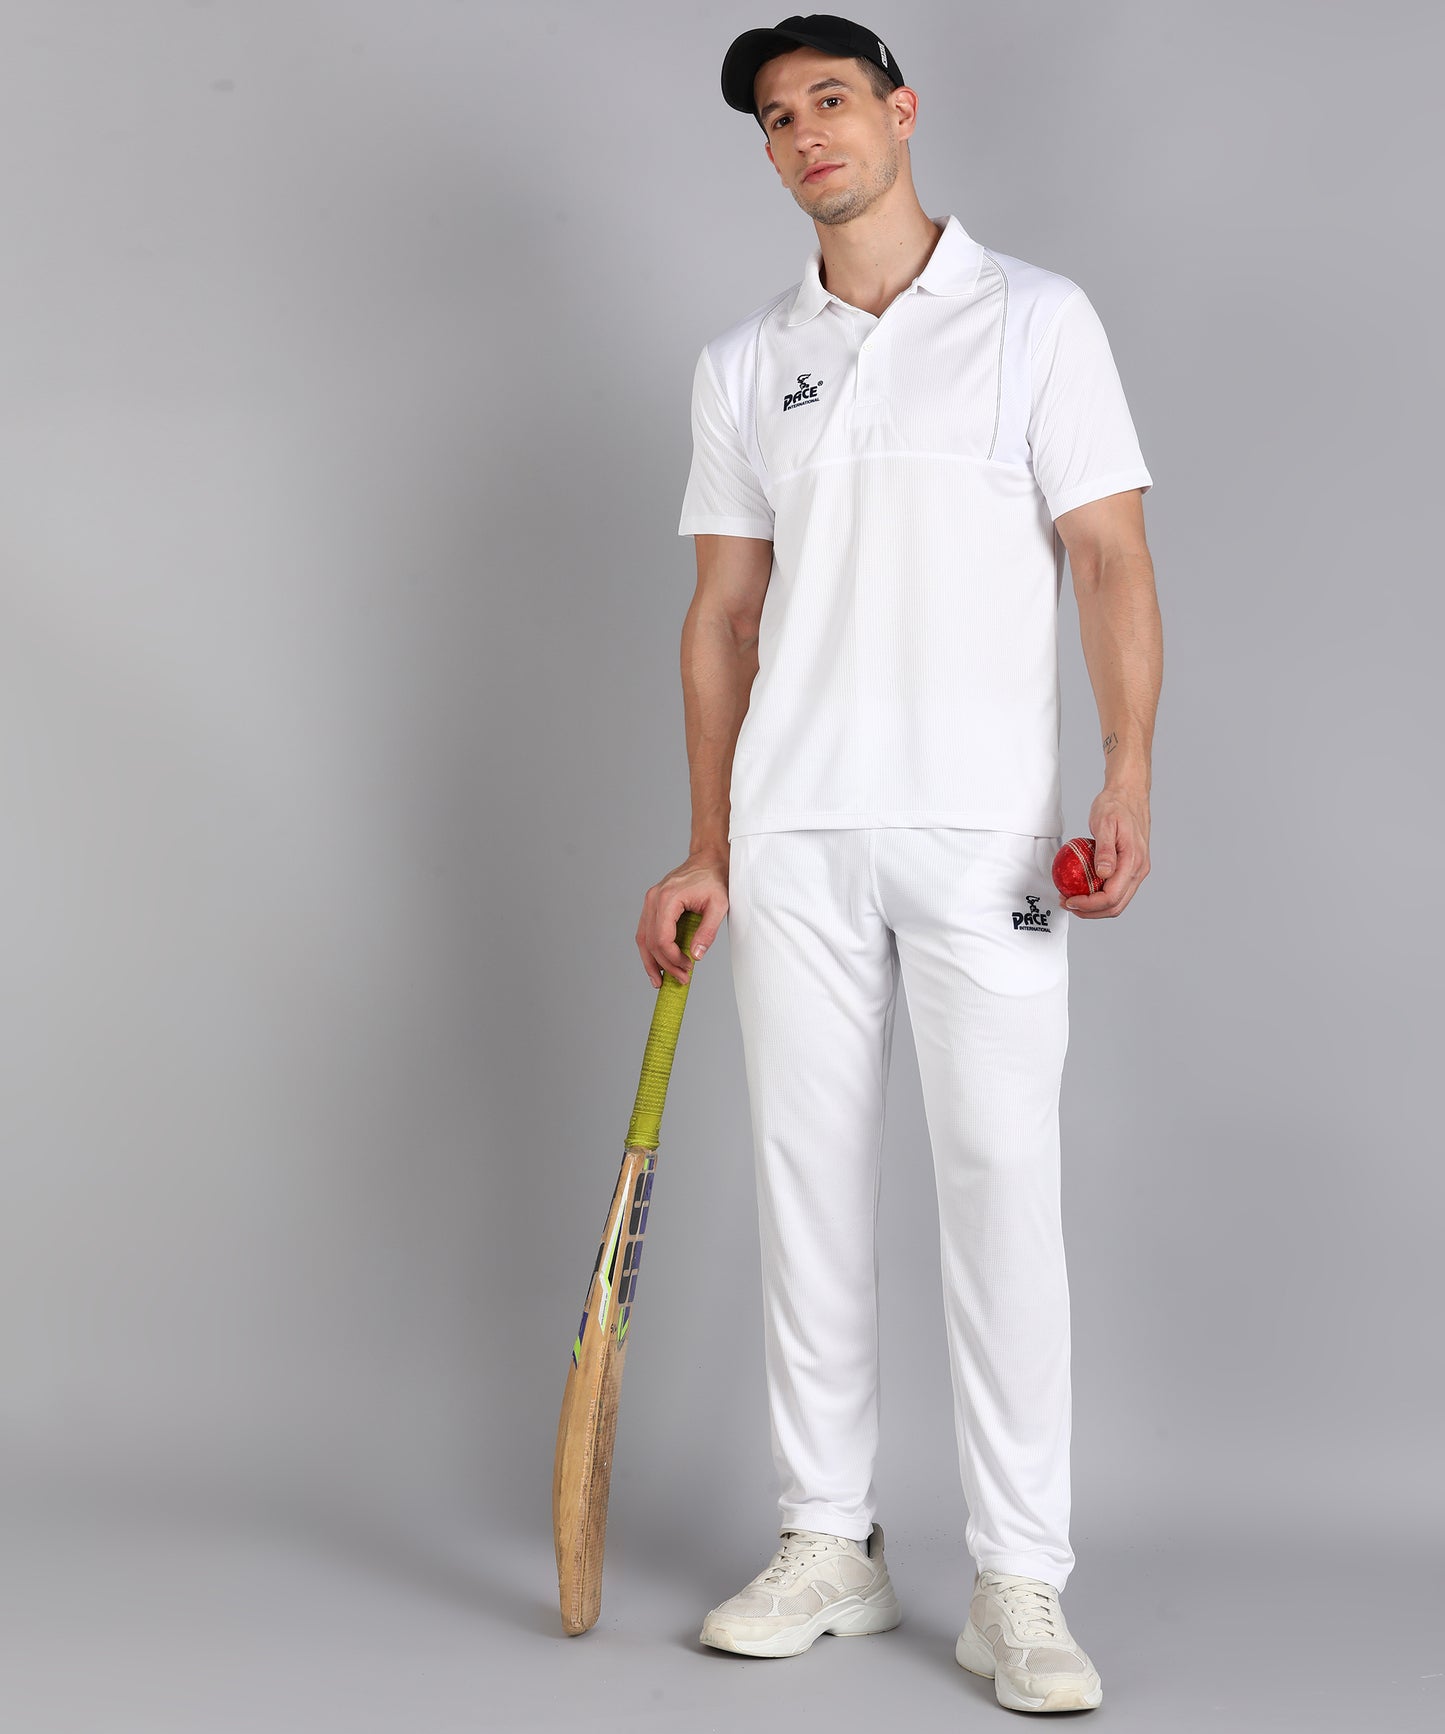 Pace International Amaze Cricket T-Shirt & Track Pant